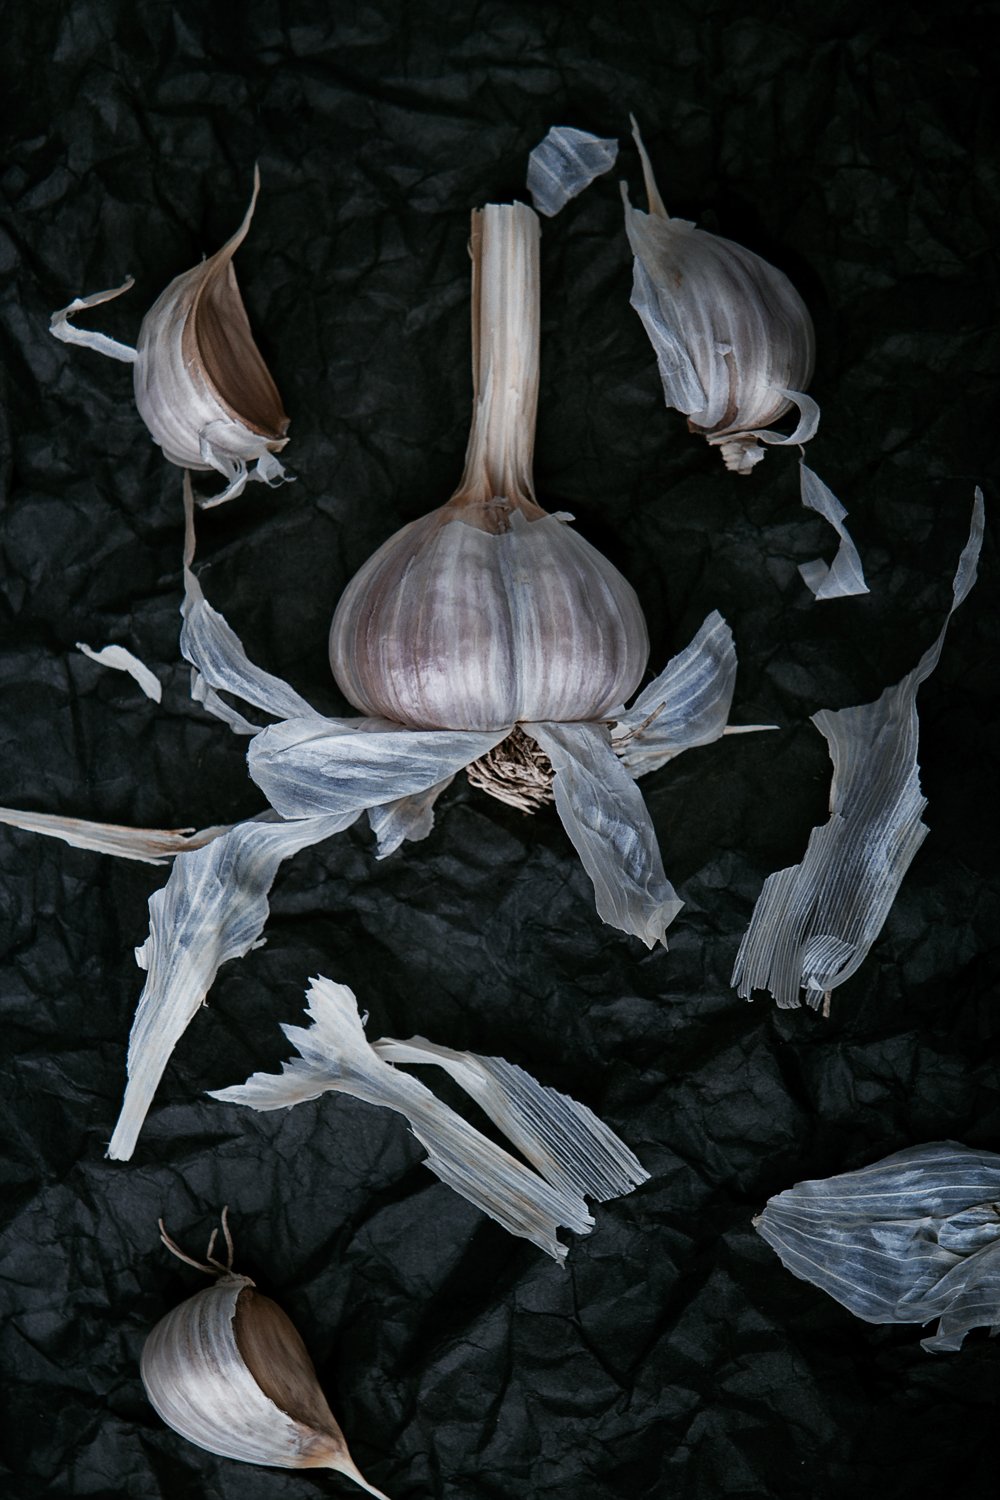 чеснок, овощ, натюрморт, дольки, шелуха, фуд фото, Наталья Голубева